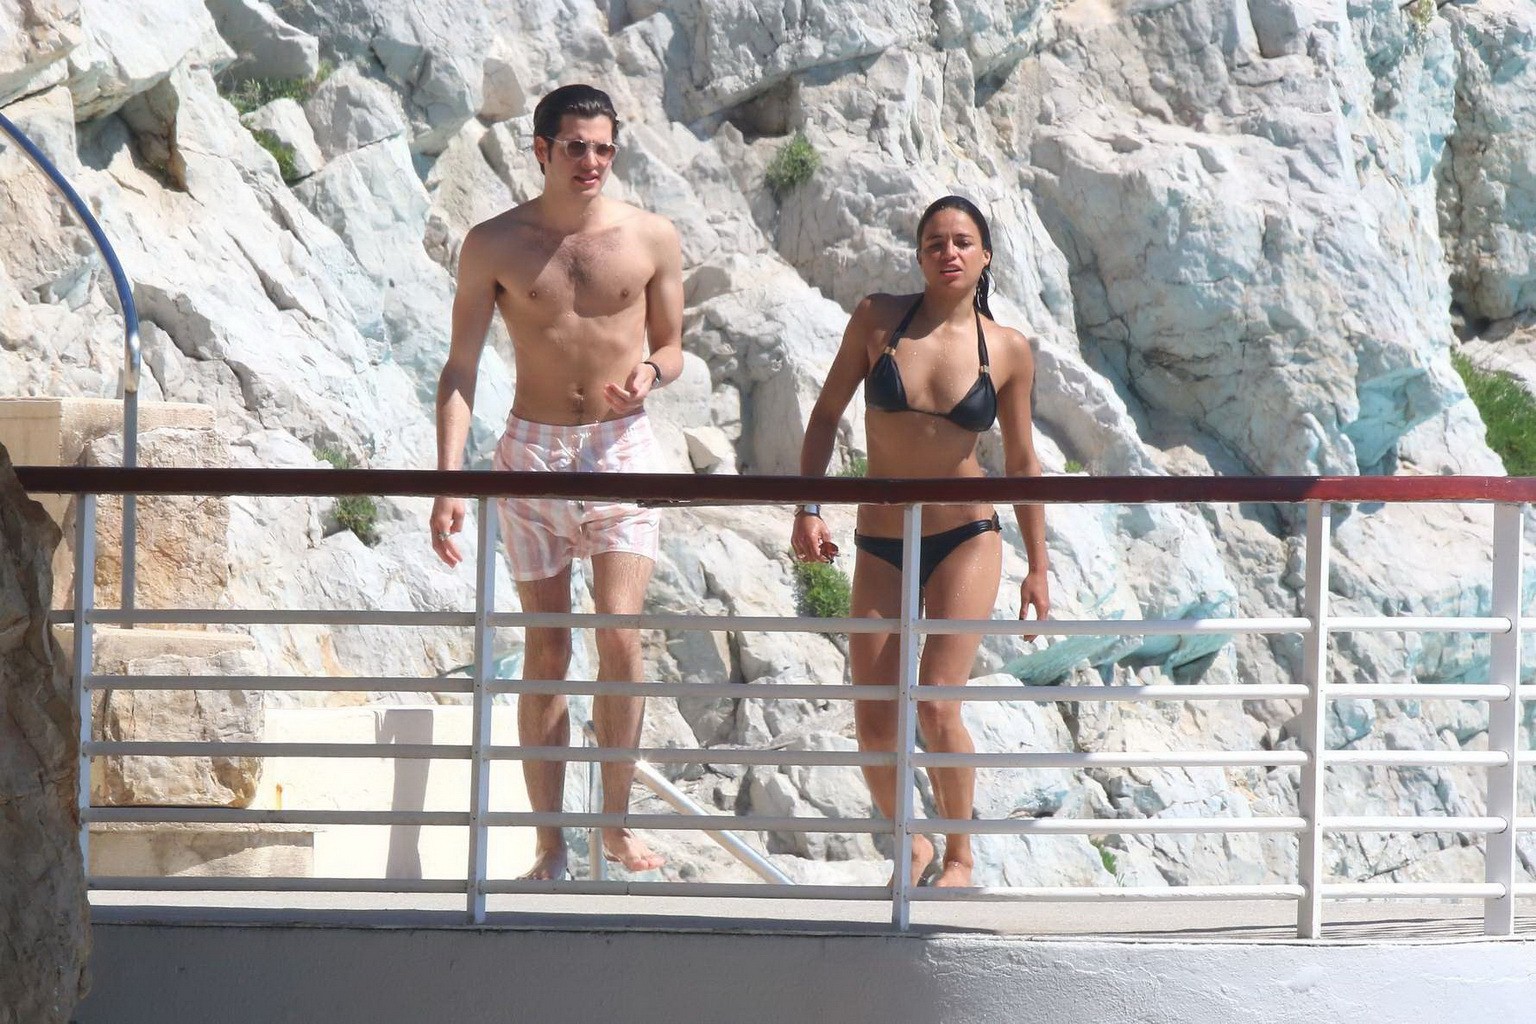 Michelle Rodriguez wearing skimpy black bikini poolside at Cap Eden Roc Hotel in #75195686